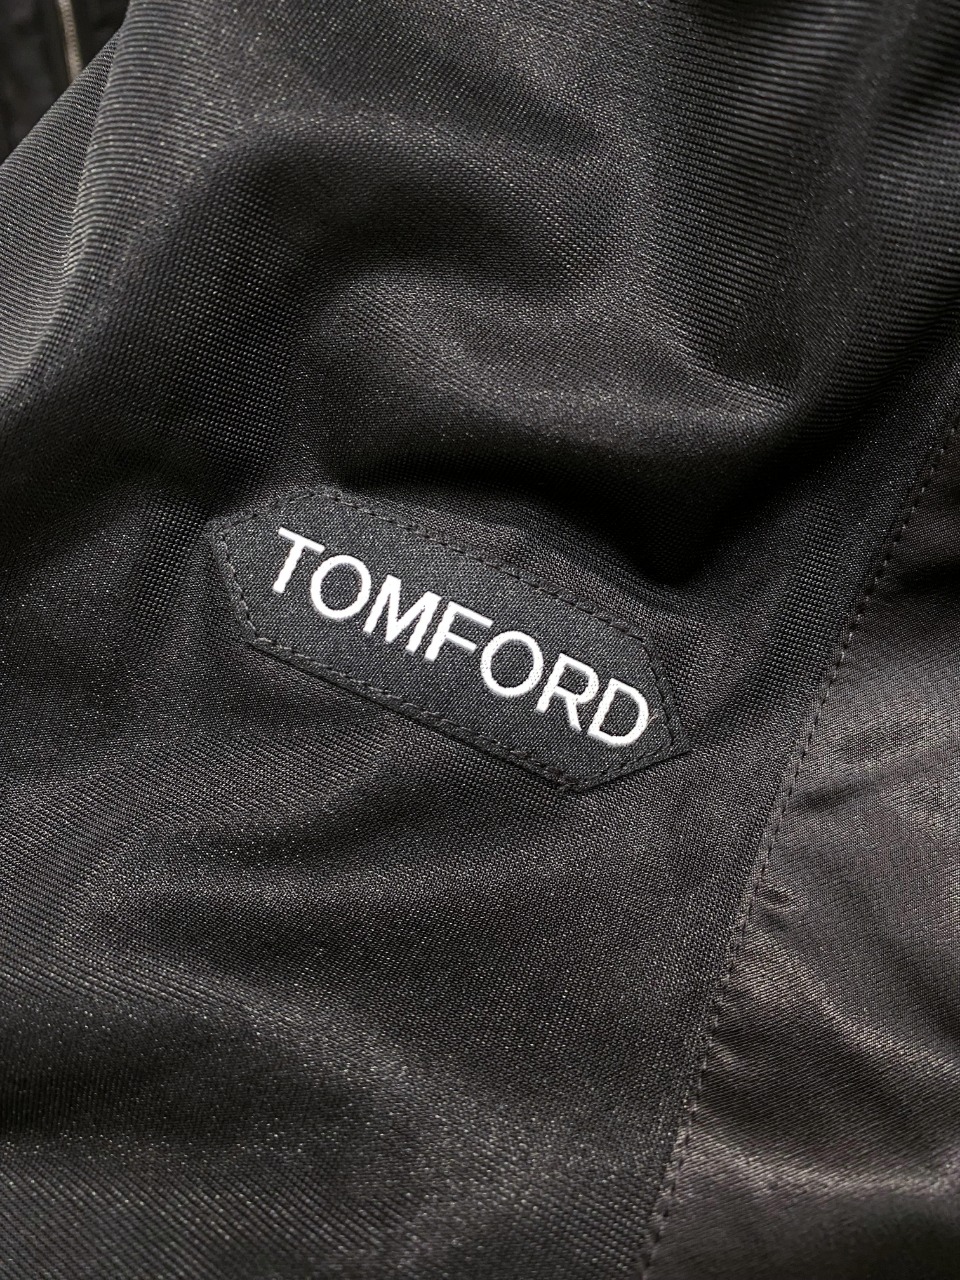 TF2024新款时尚休闲夹克外套版型高端的时尚美学设计结合立体裁剪的版型使穿着更具舒适性和观赏性面料采用